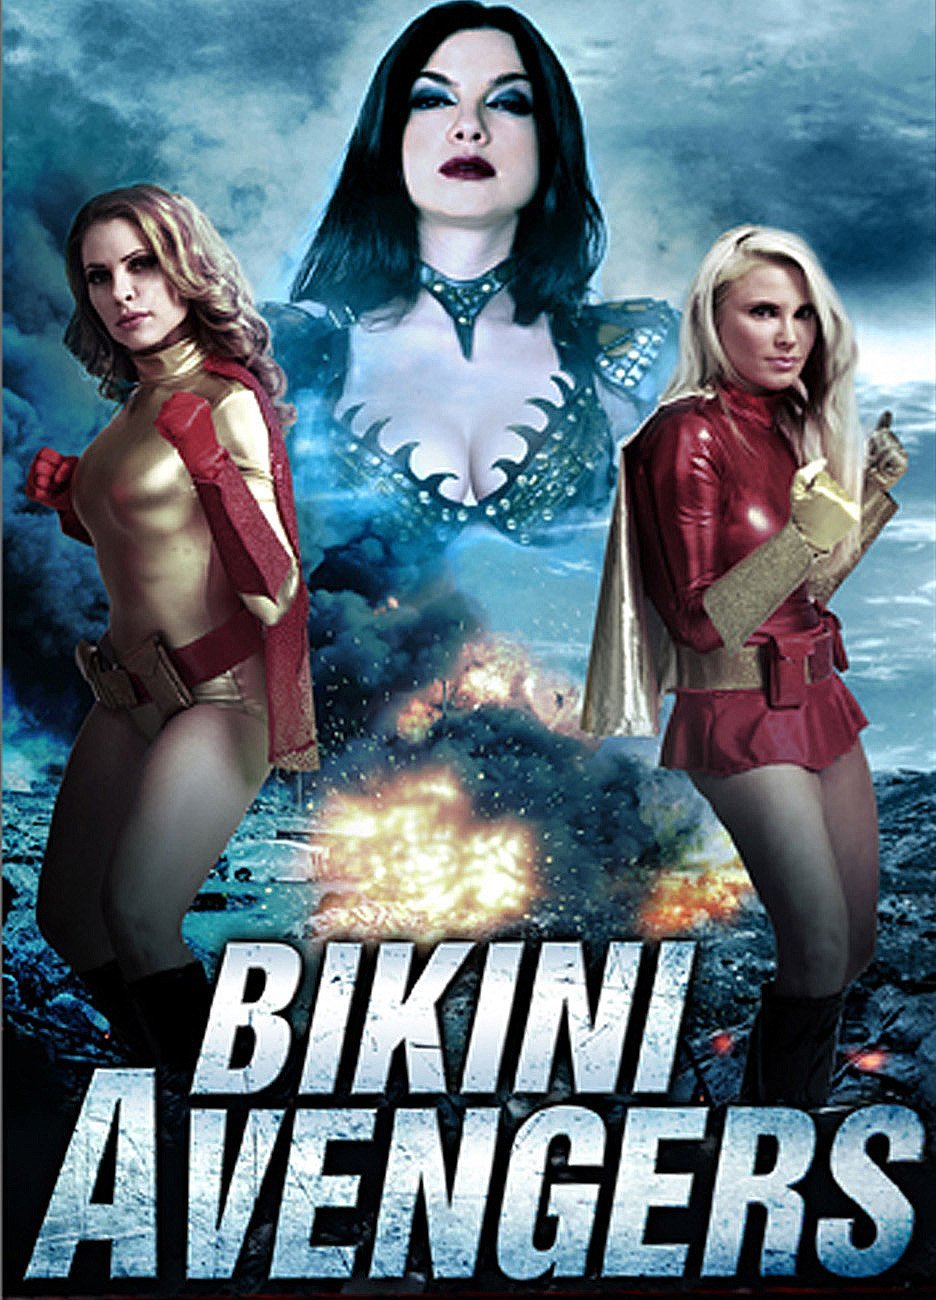 Bikini Avengers (2015) starring Erika Jordan on DVD on DVD